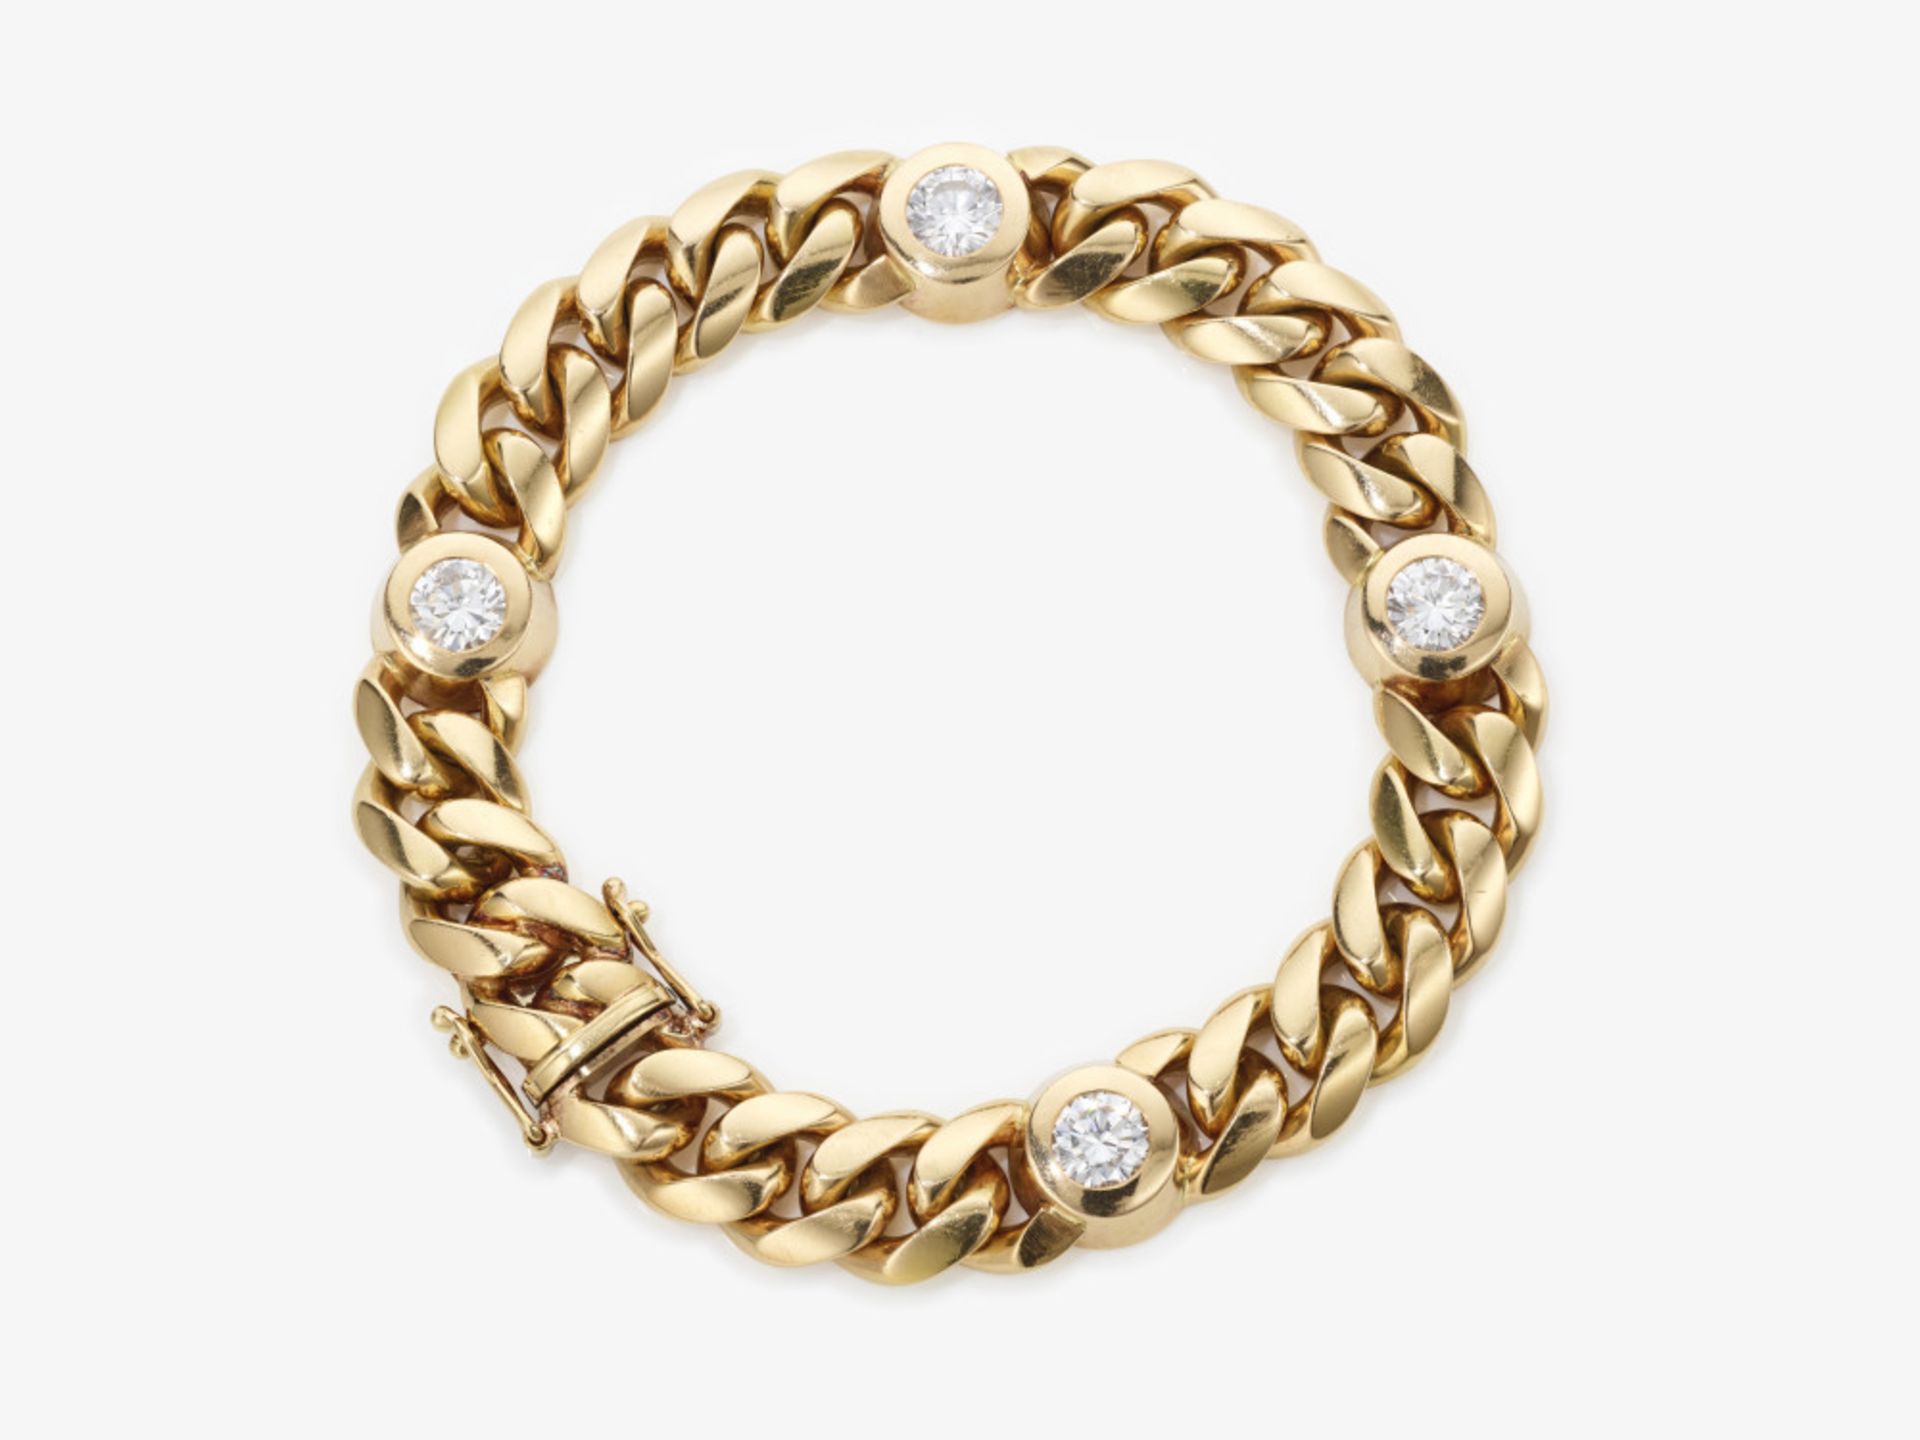 A bracelet with brilliant-cut diamonds